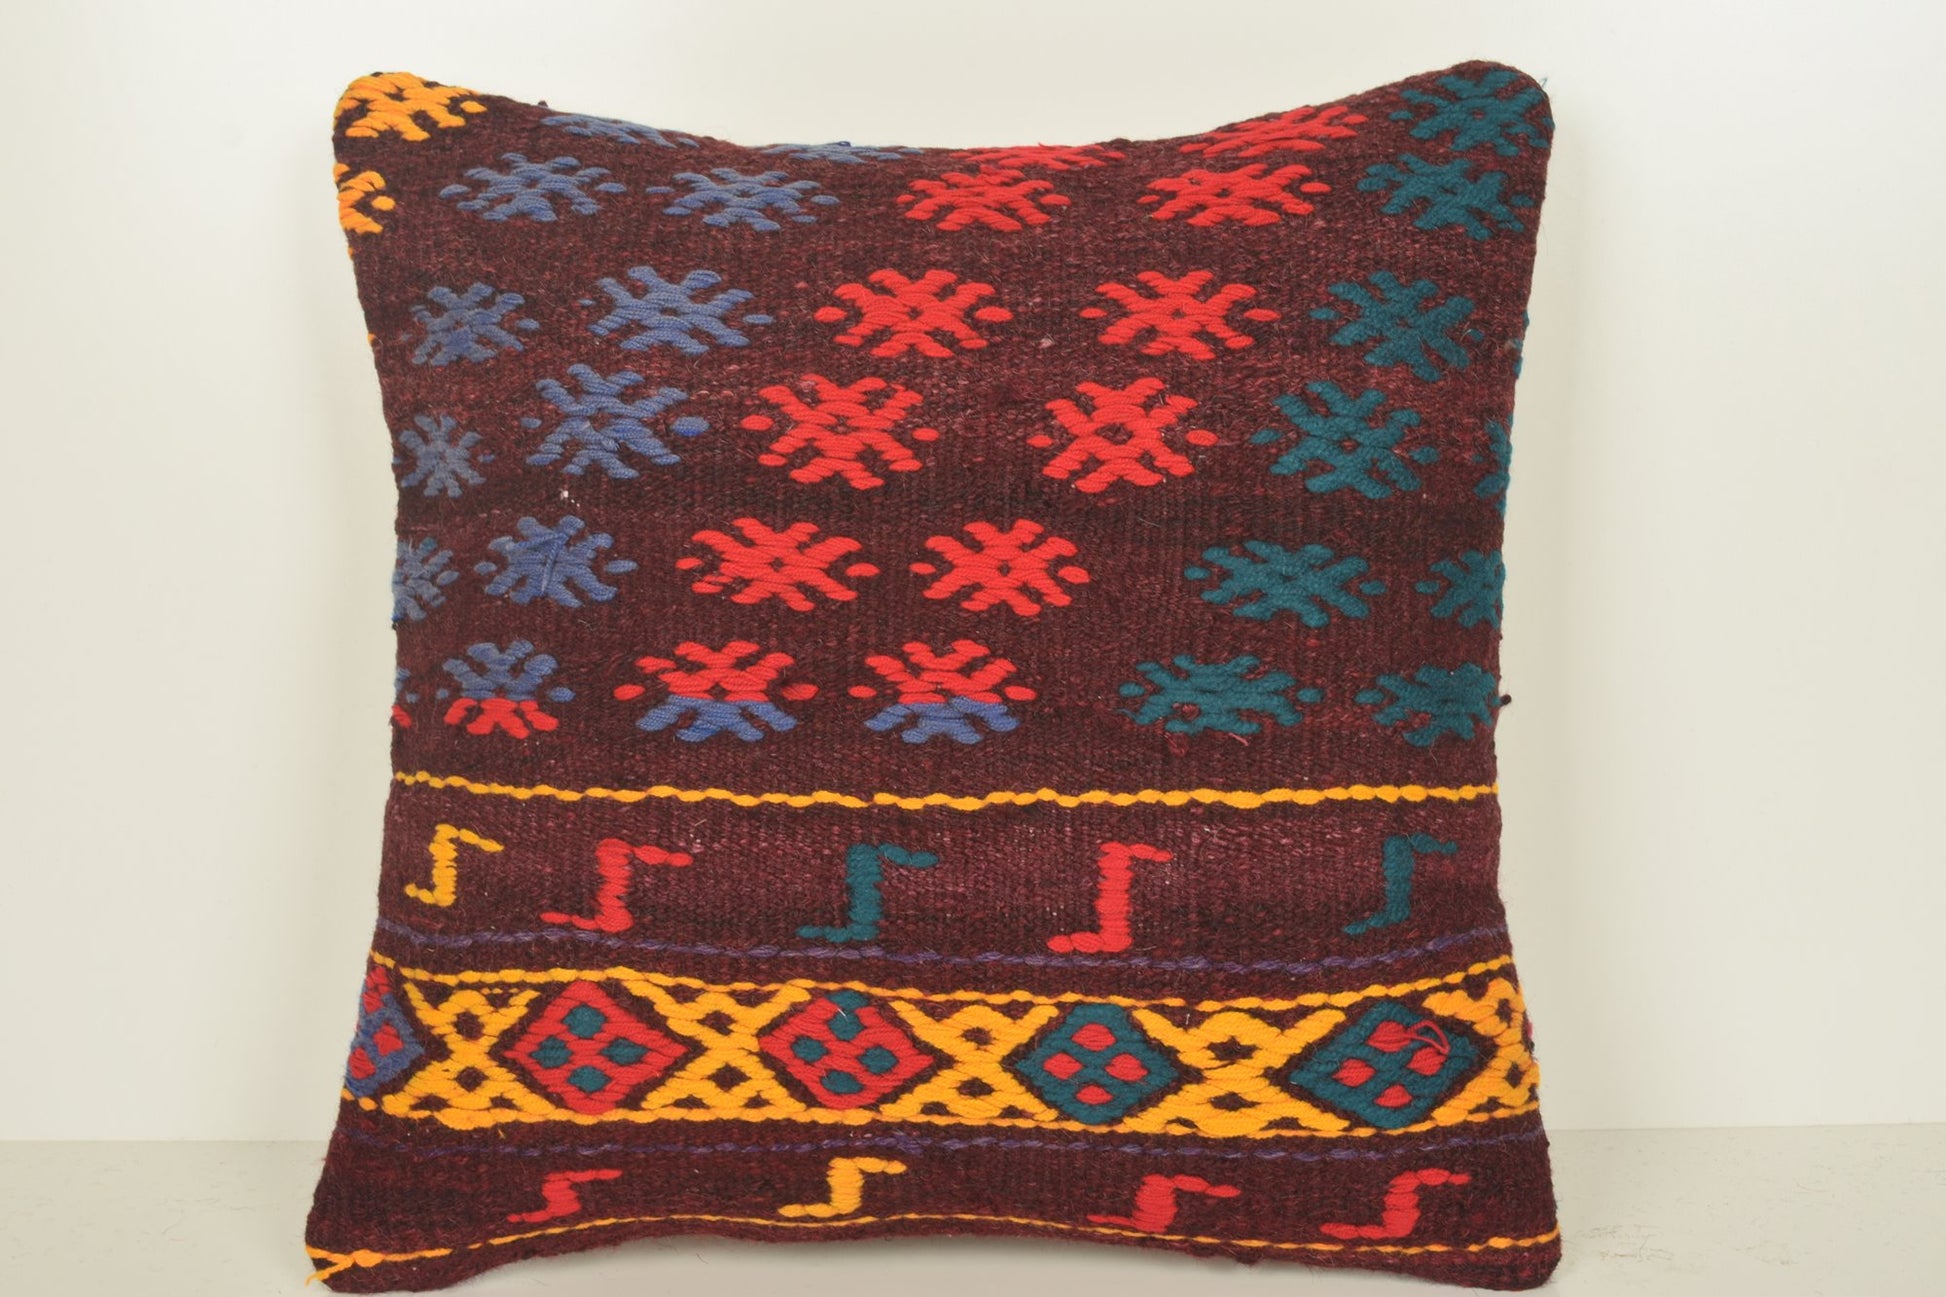 Turkish Cushions Perth C01387 18x18 Regional Rustic Wool